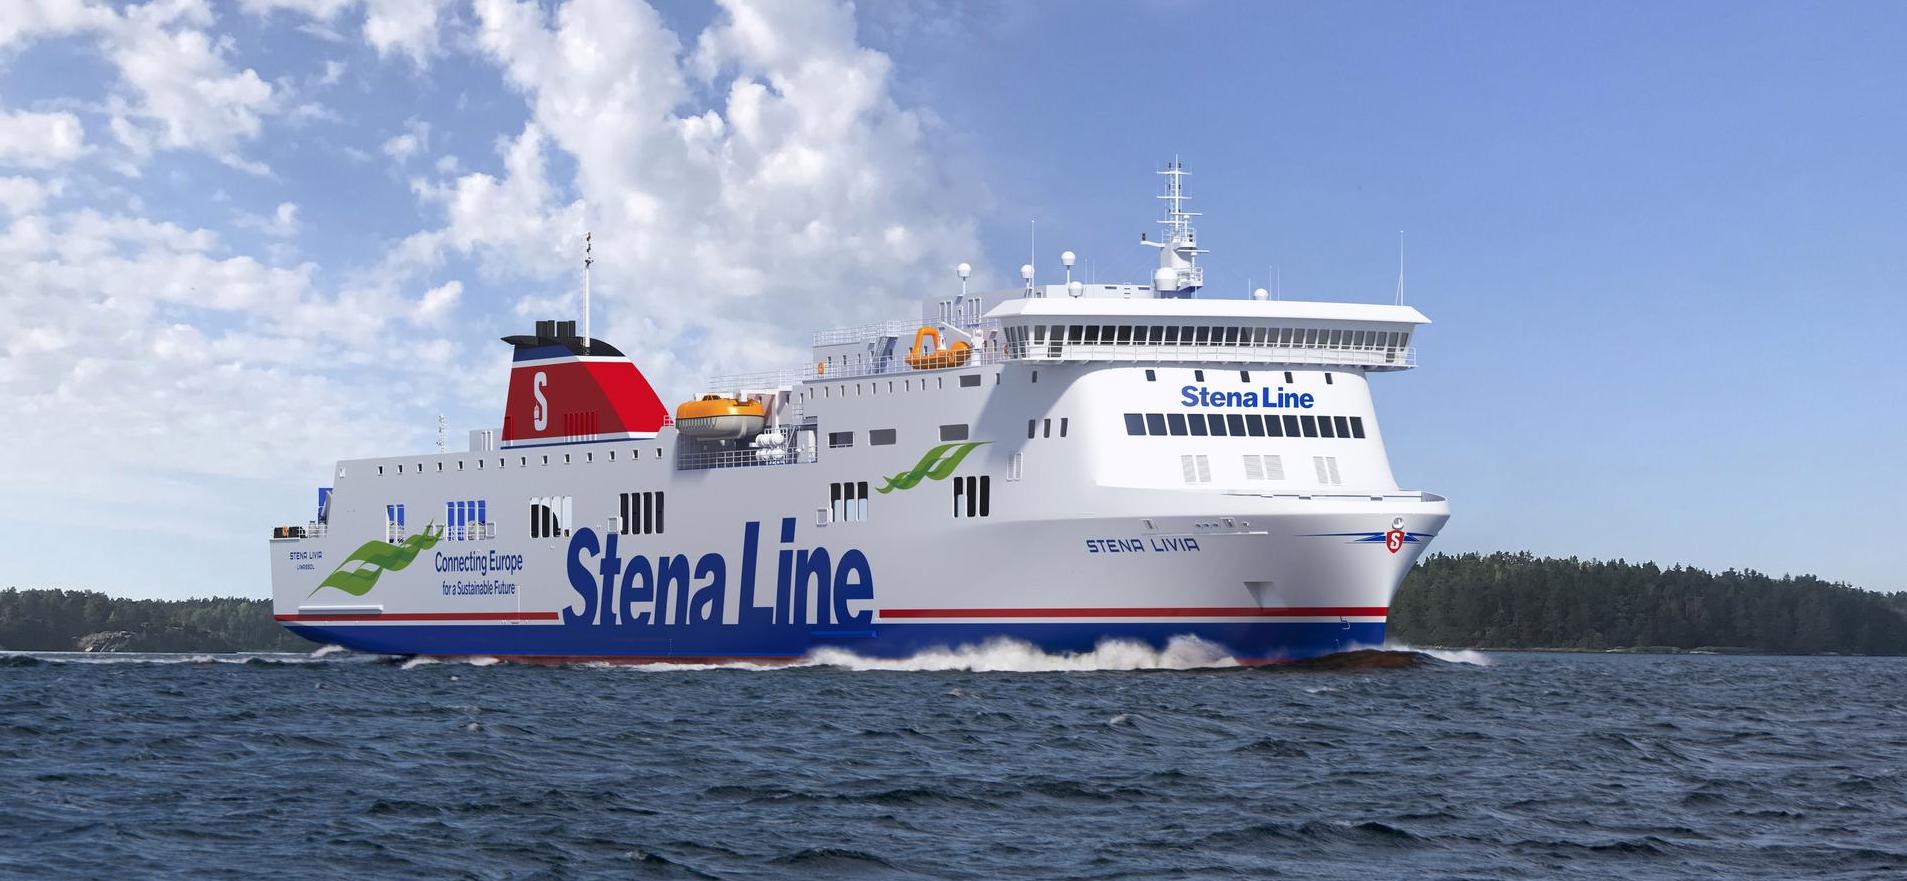 Foto van Stena Line - Stena Livia schip